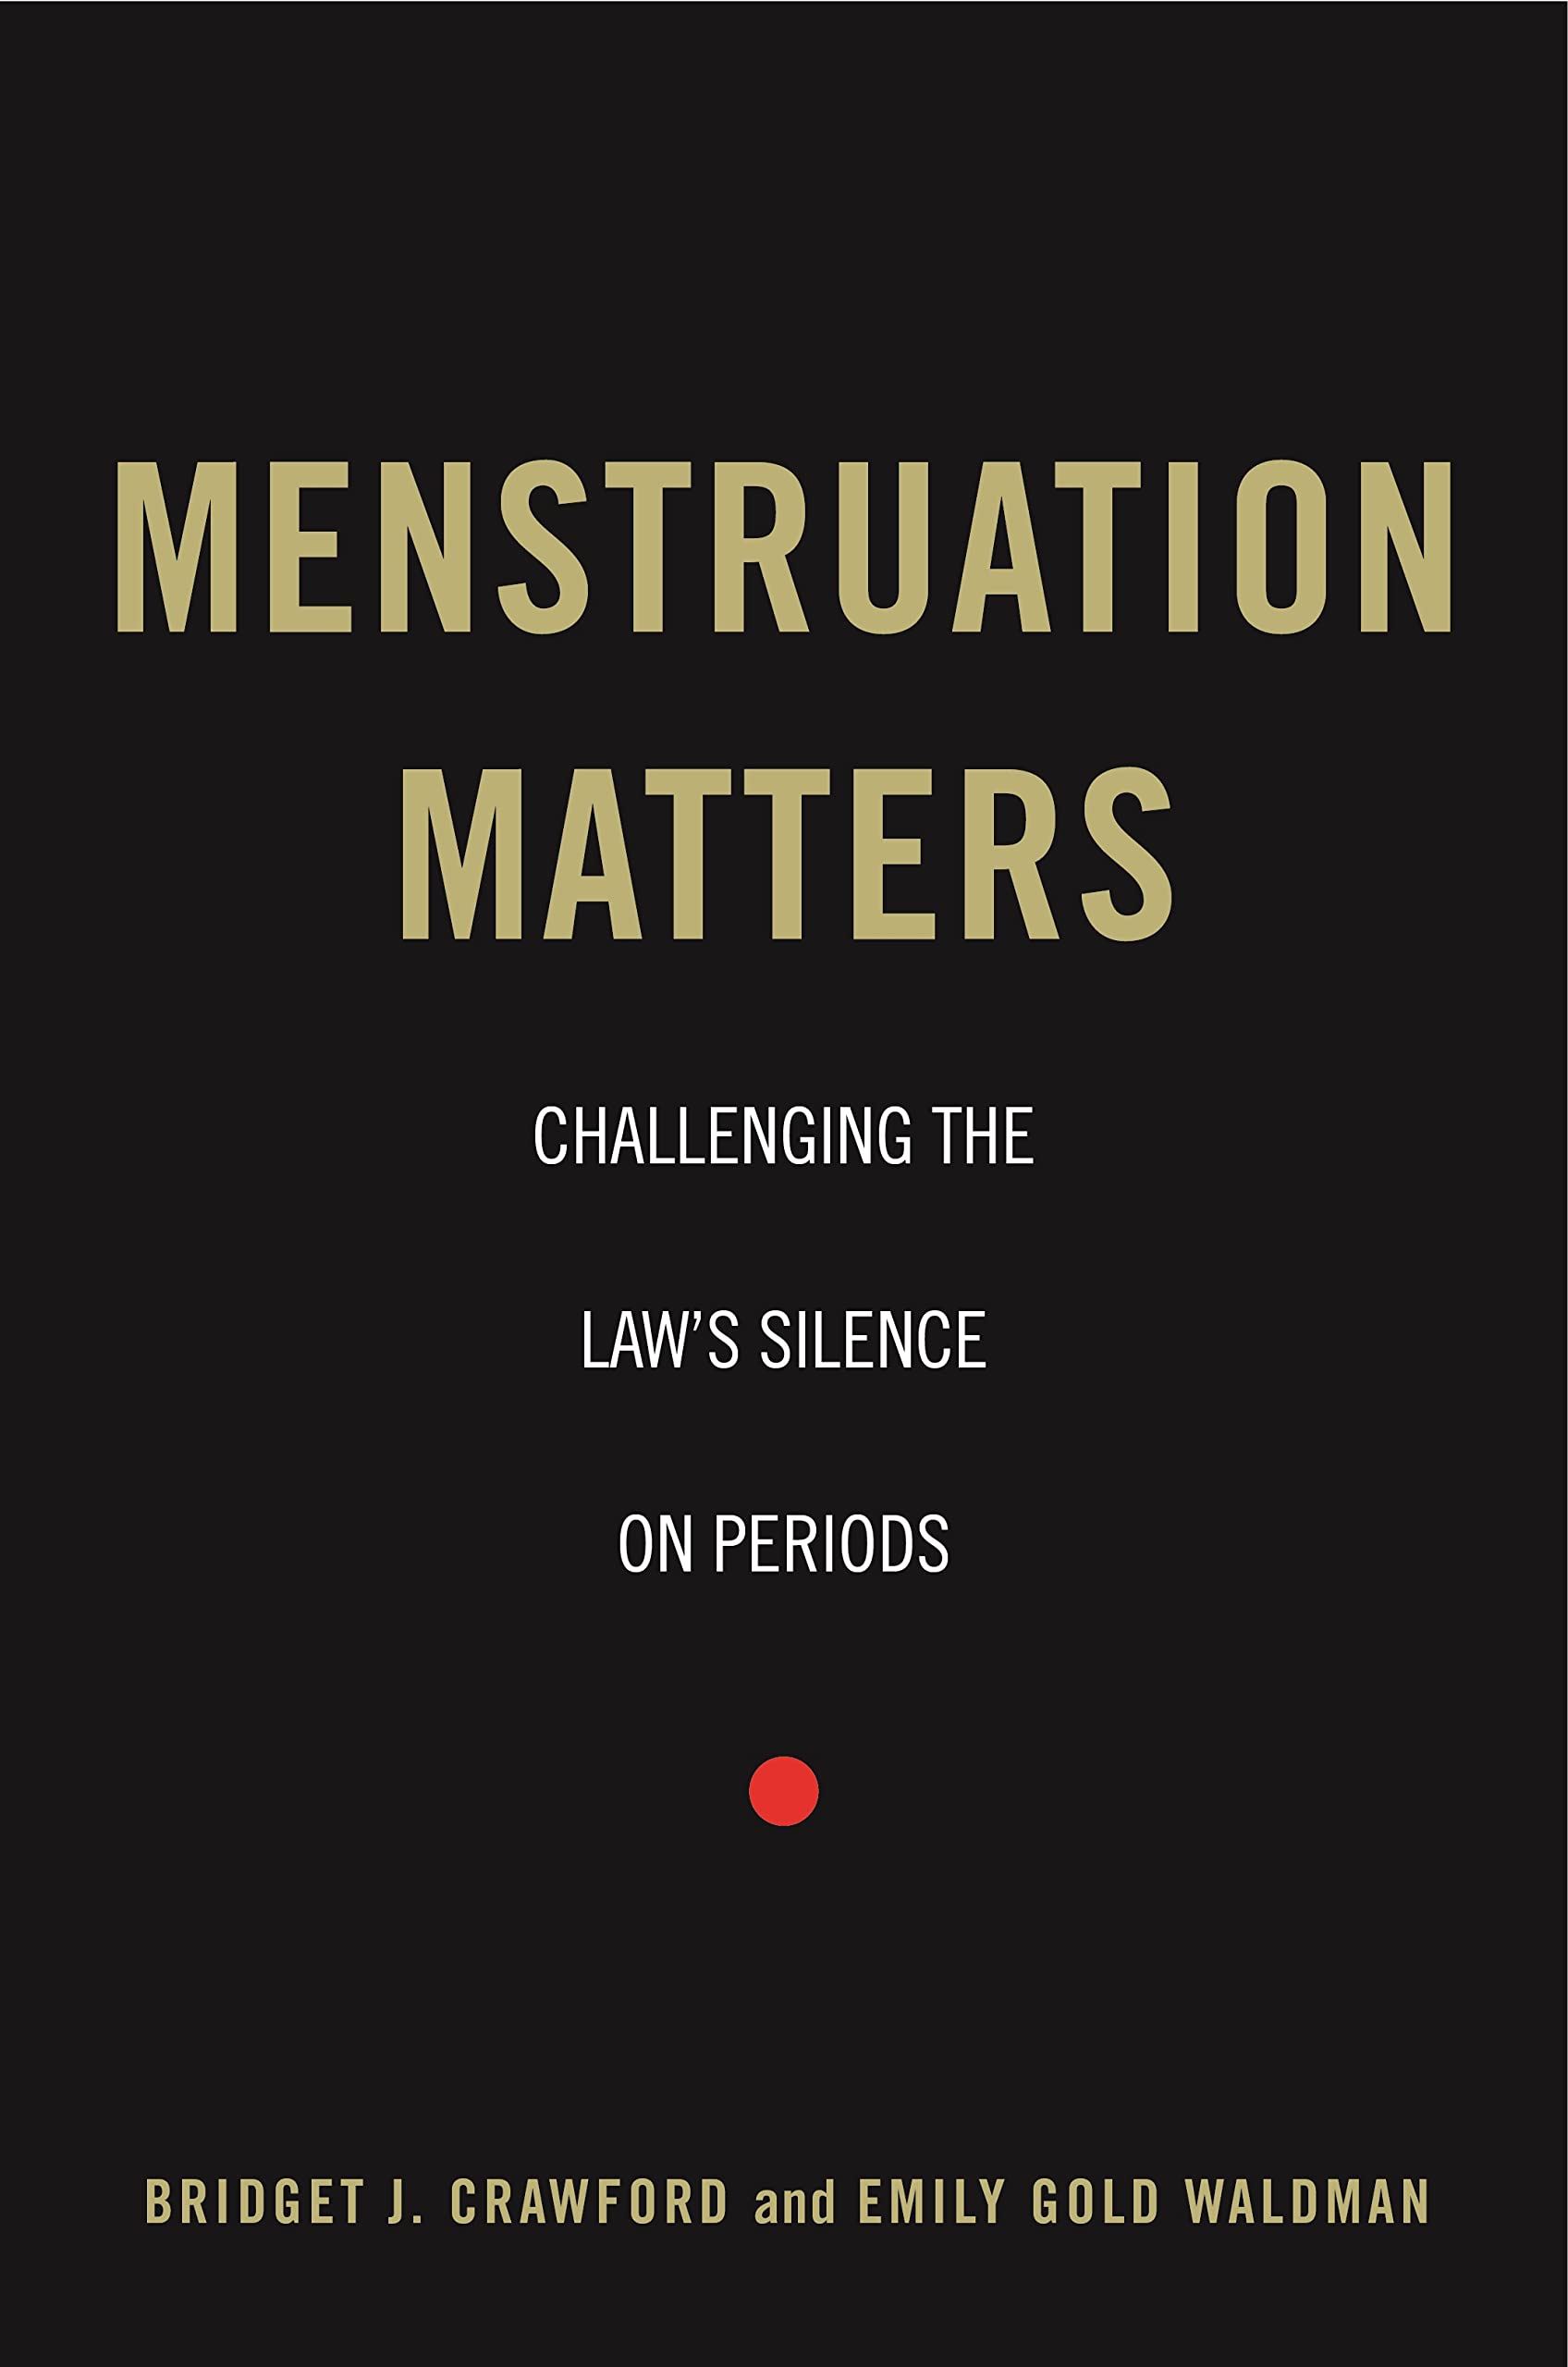 Menstruation matters